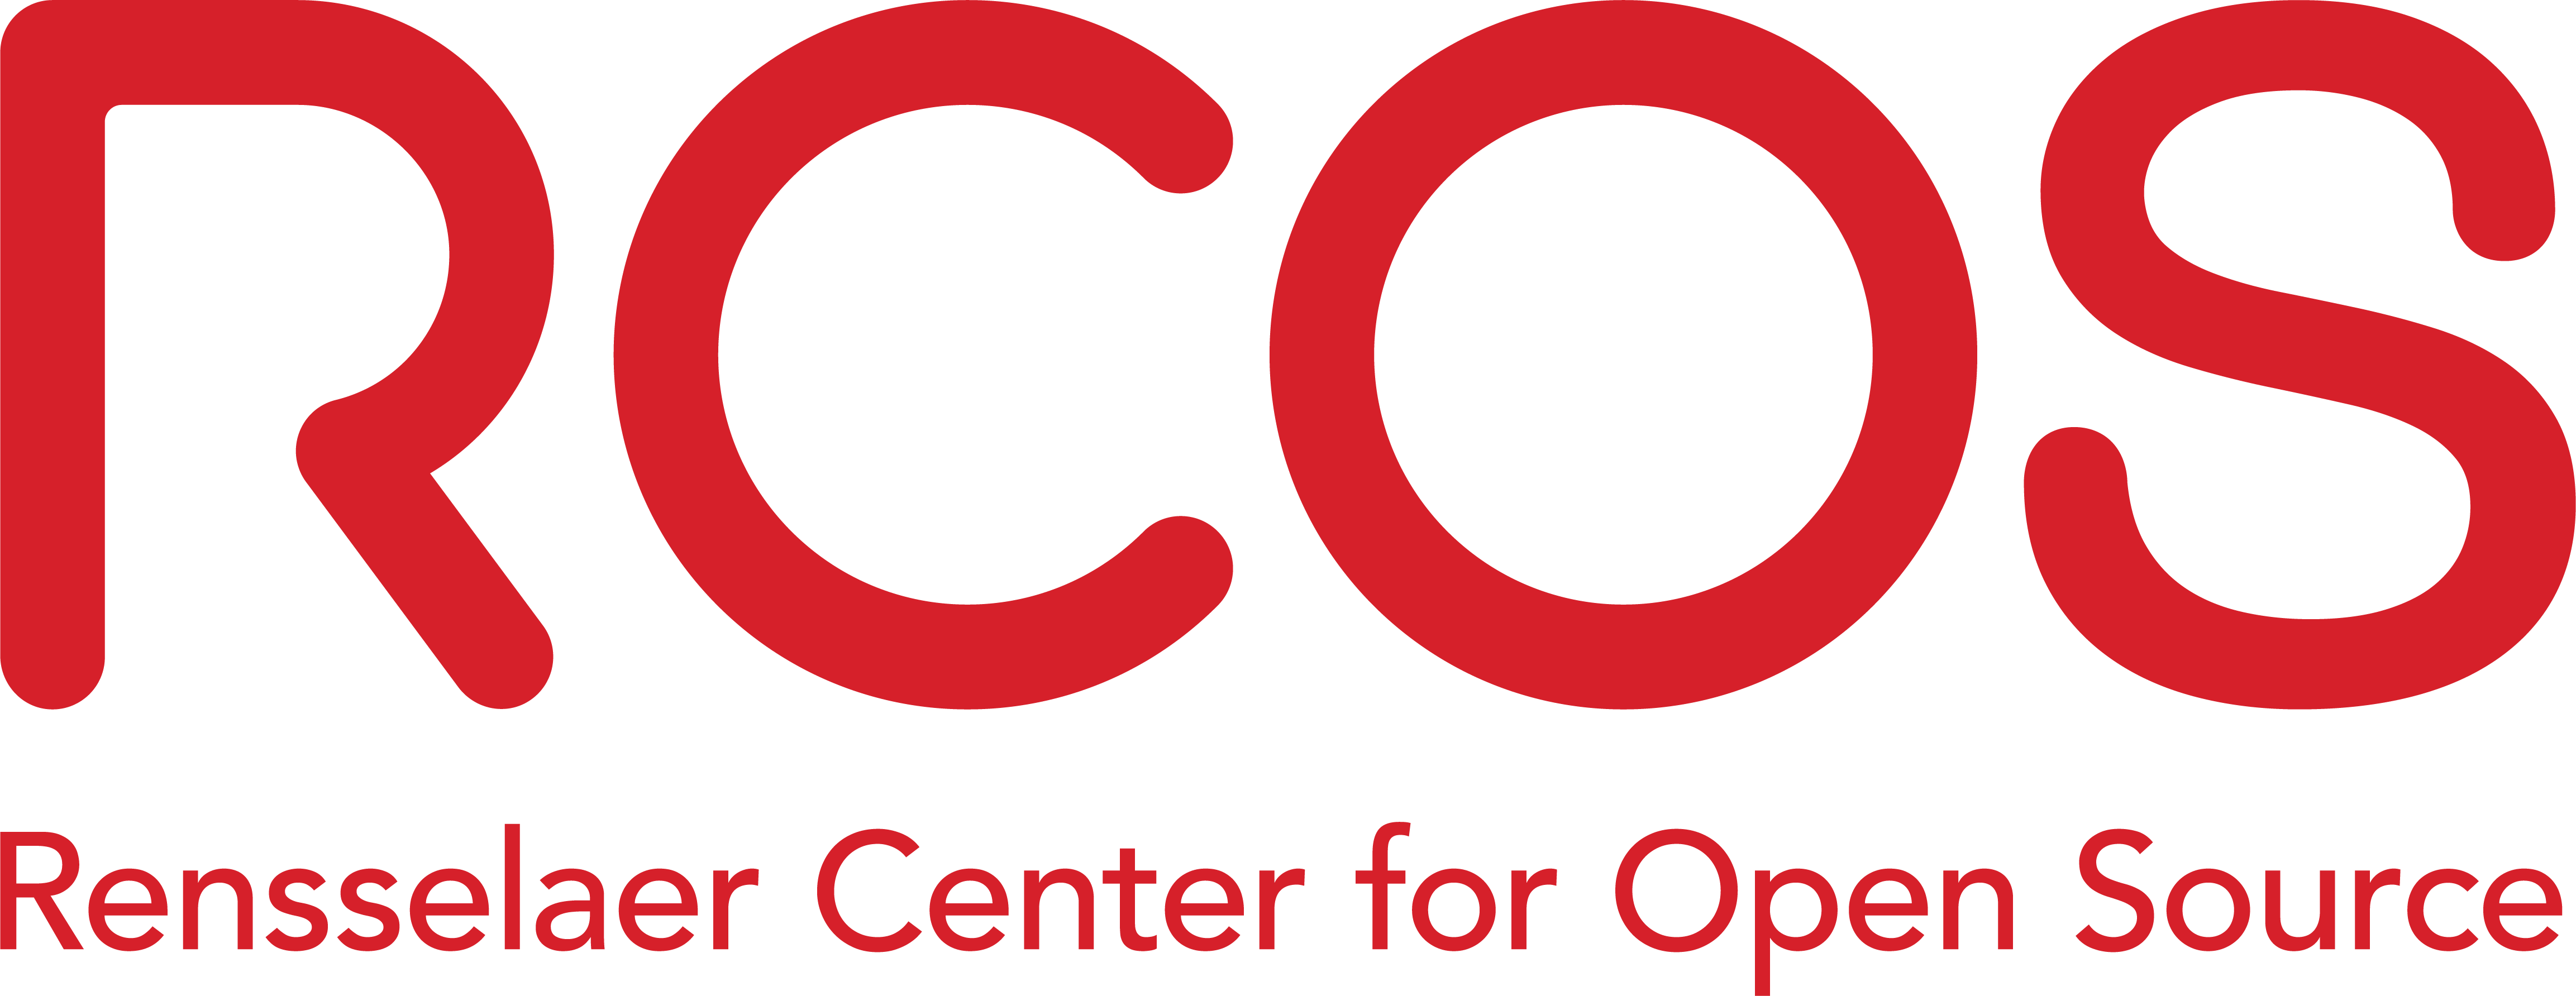 Rensselaer Center for Open Source